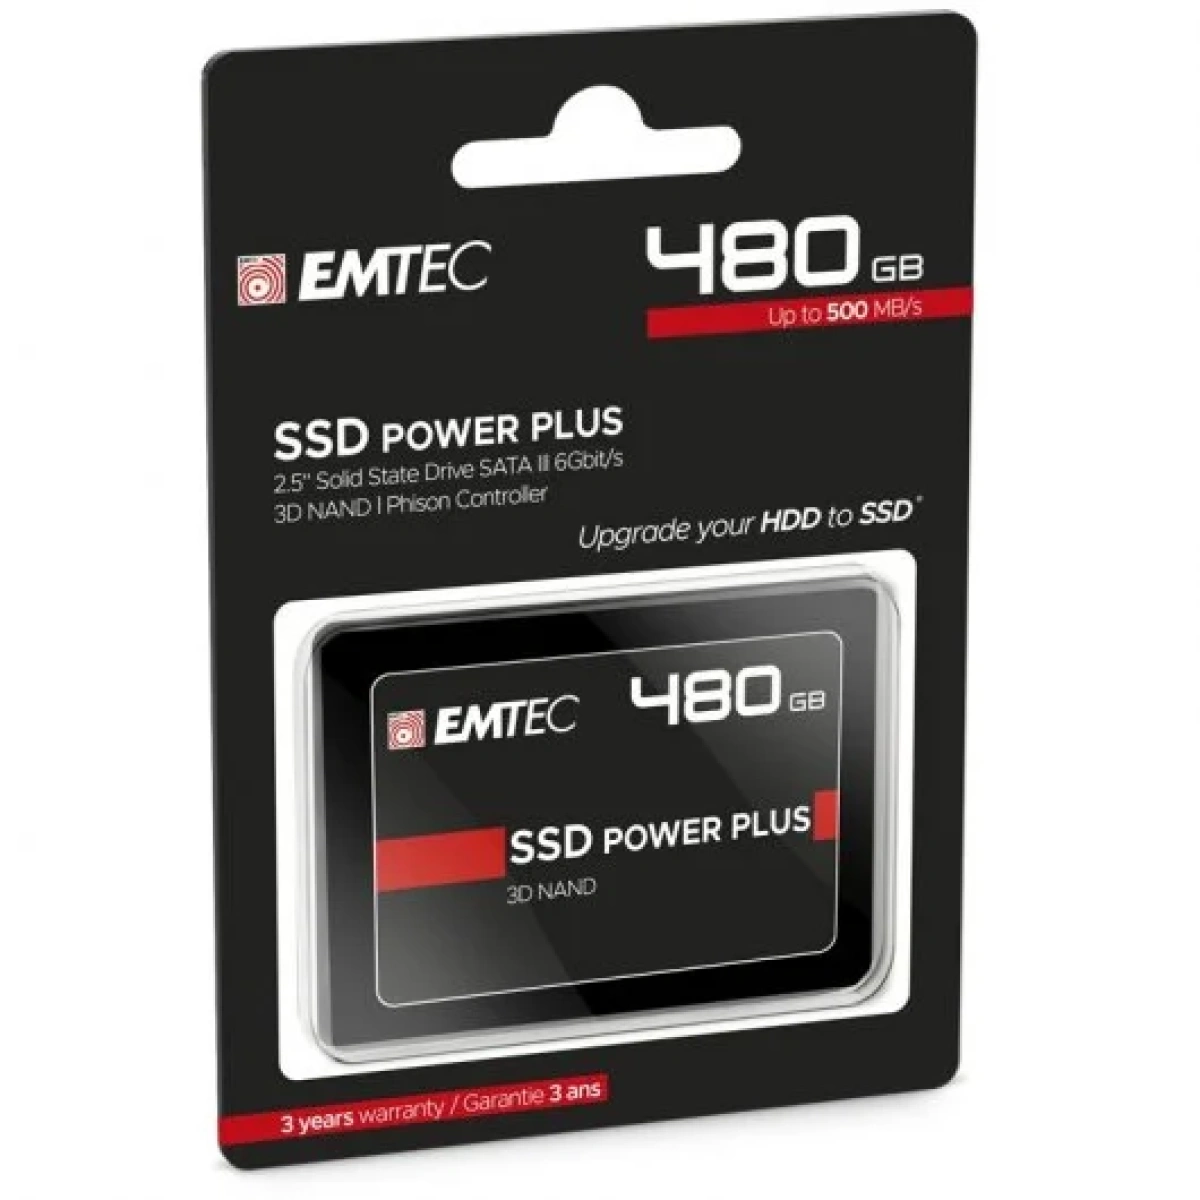 3678 emtec x150 ssd power plus 25 480gb sata 3 mejor precio